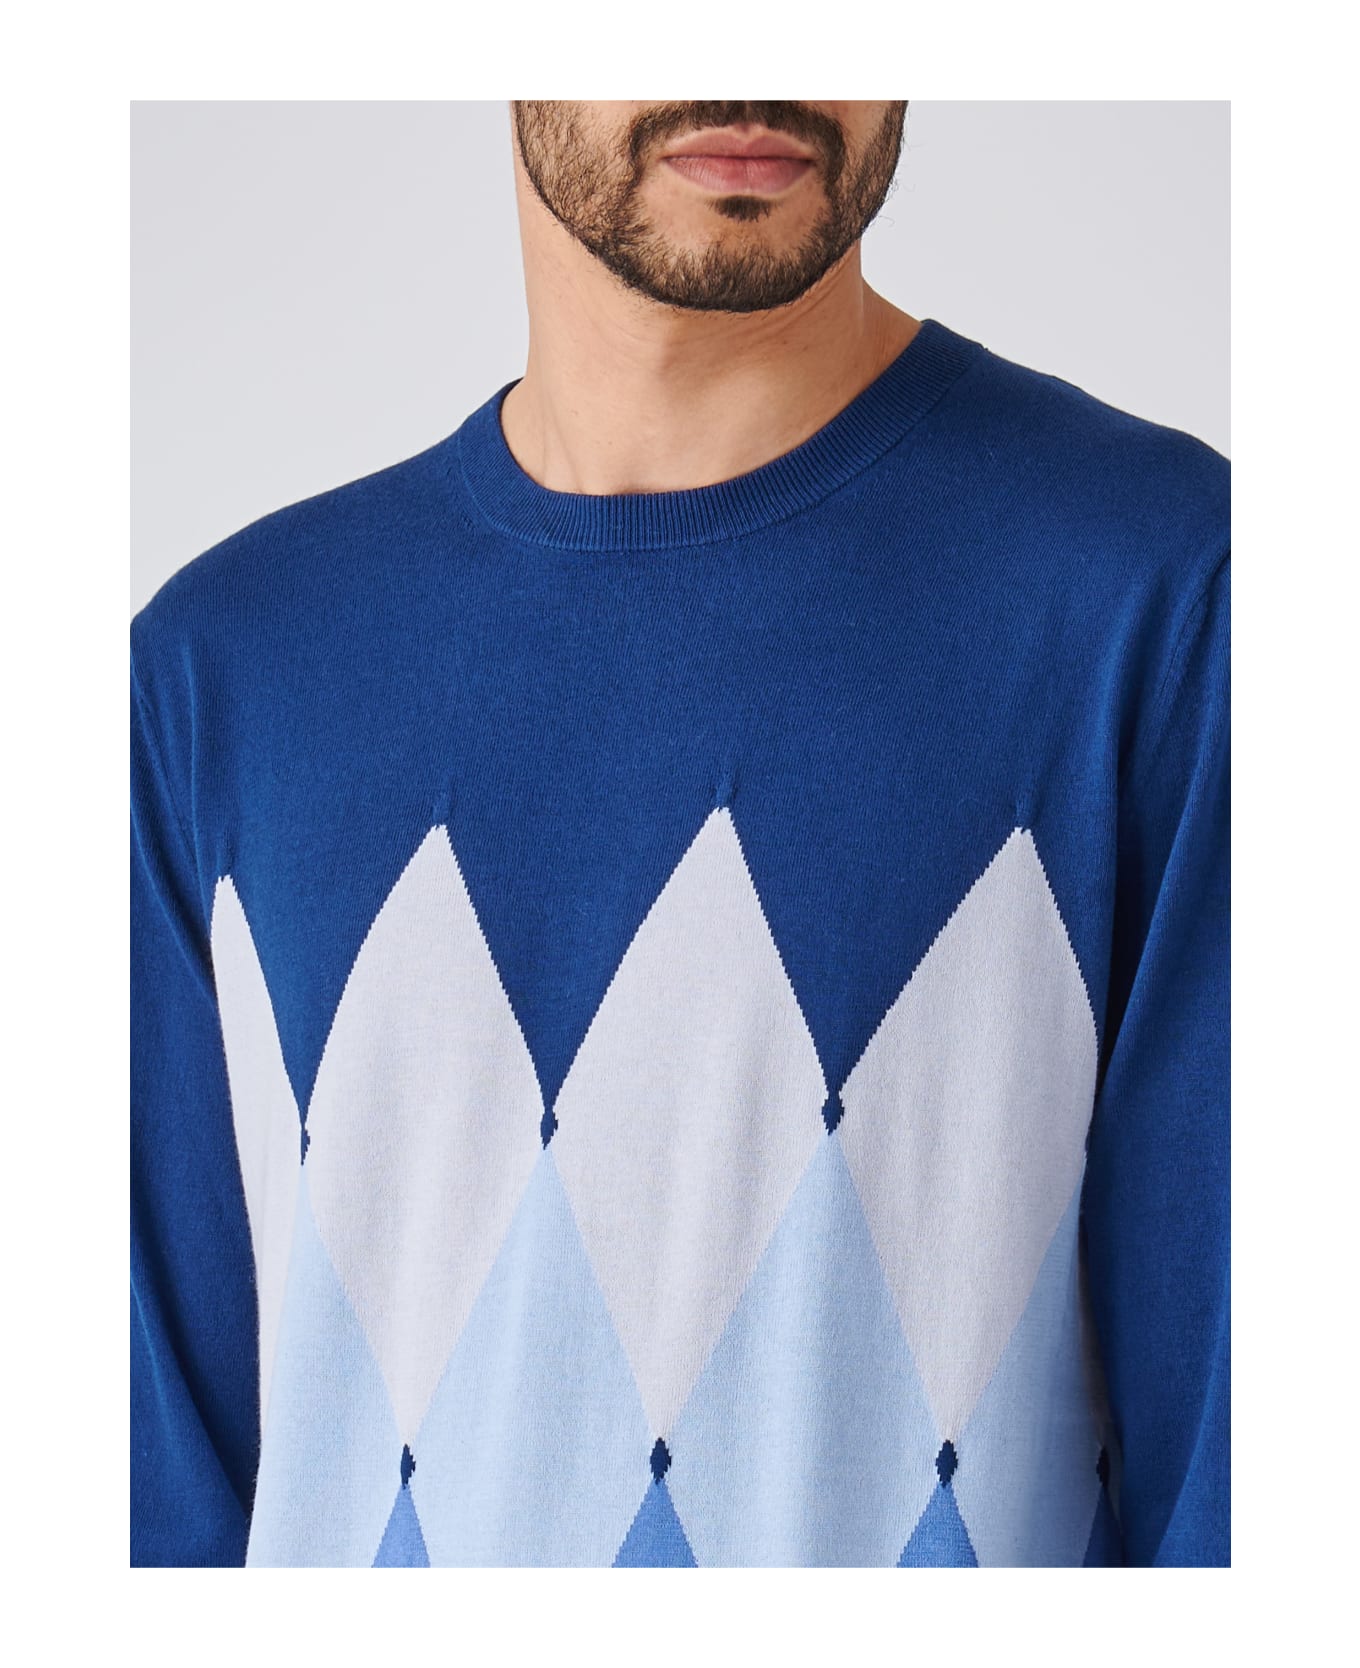 Ballantyne R Neck Pullover Sweater - BLU